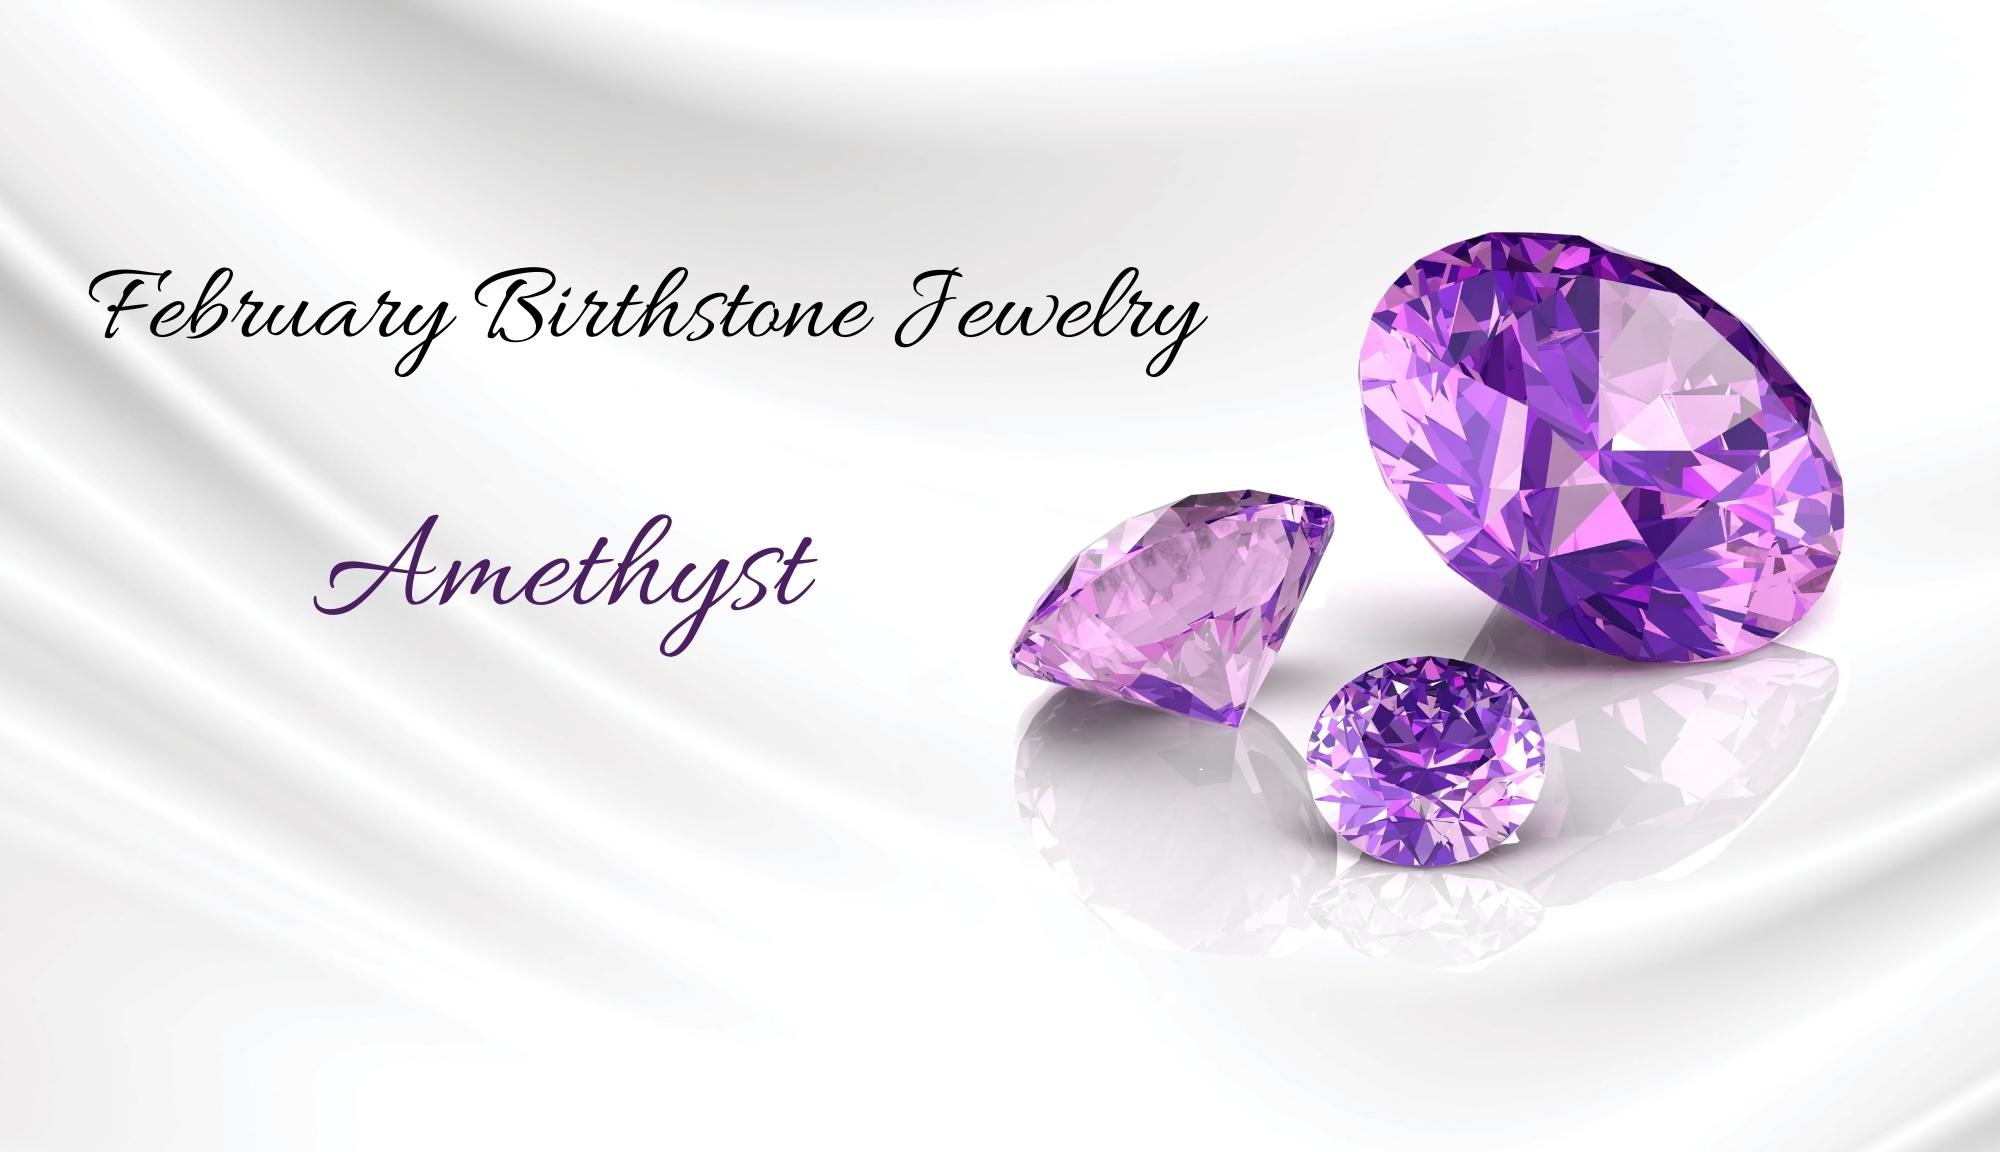 February Birthstone - Amethyst Jewelry Pieces